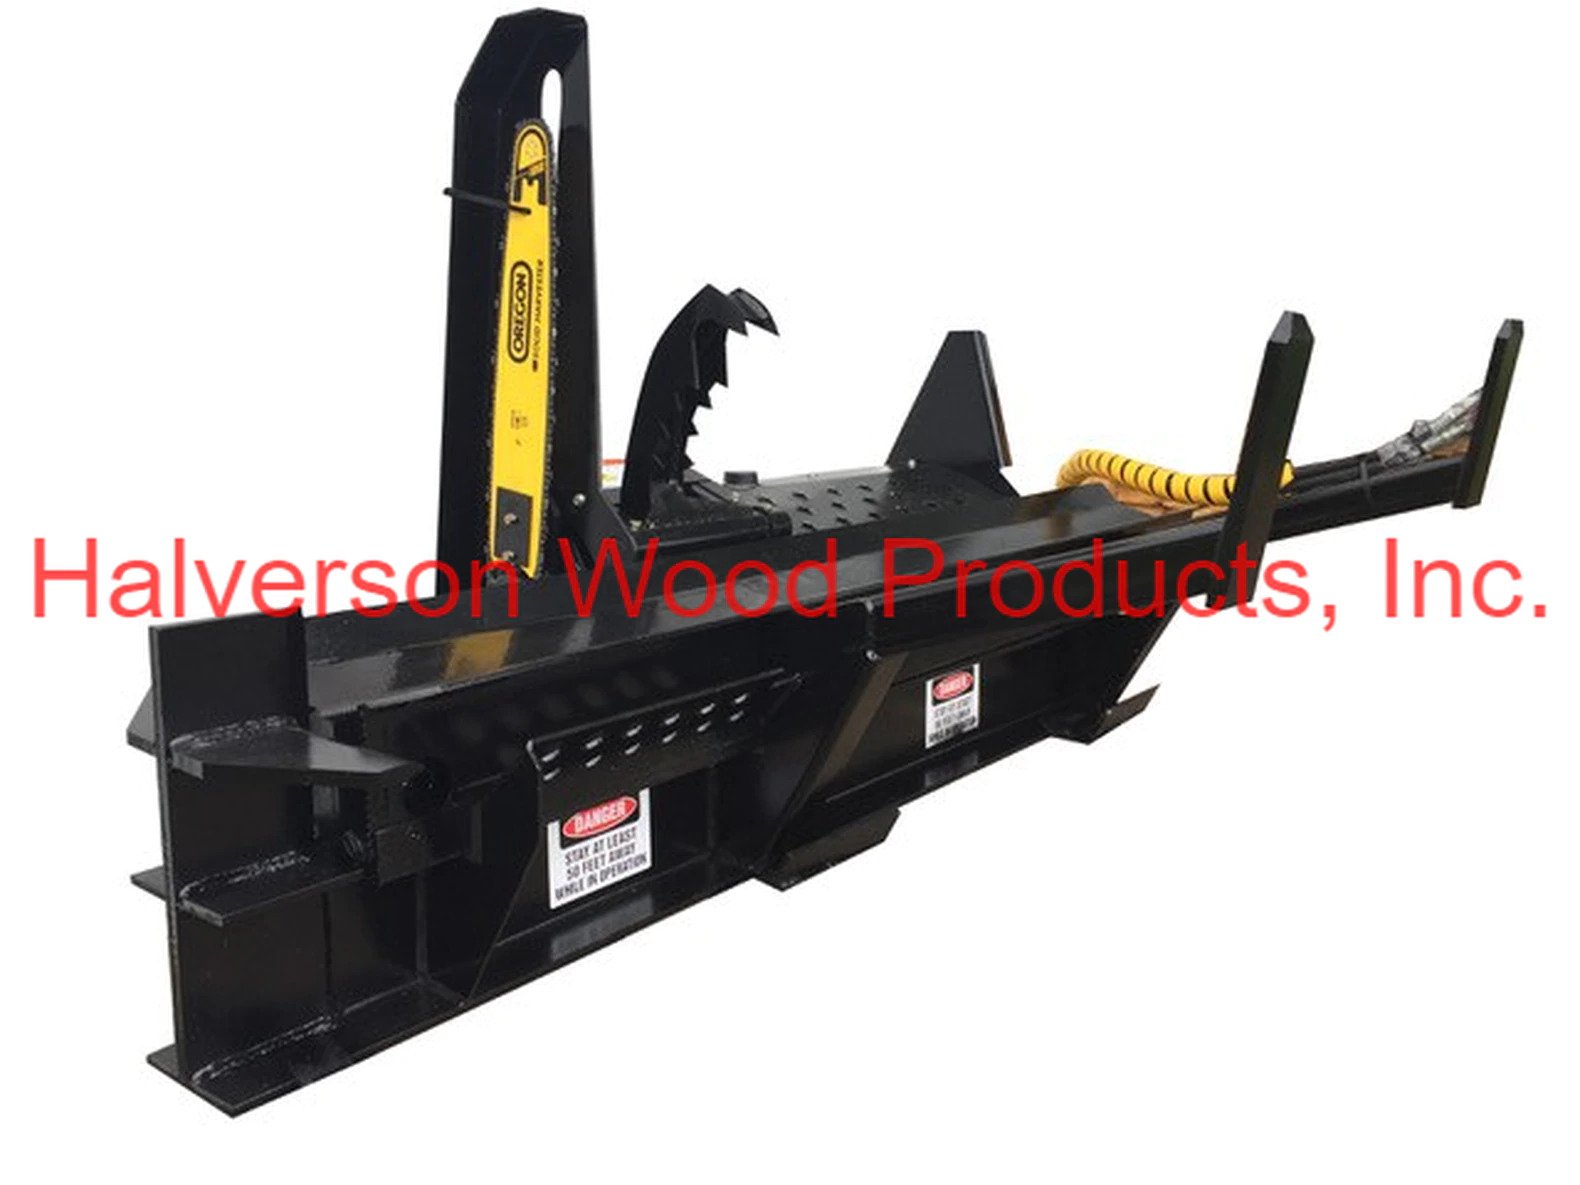 HWP 120 Fixed Head Firewood Processor - Halverson Firewood Products